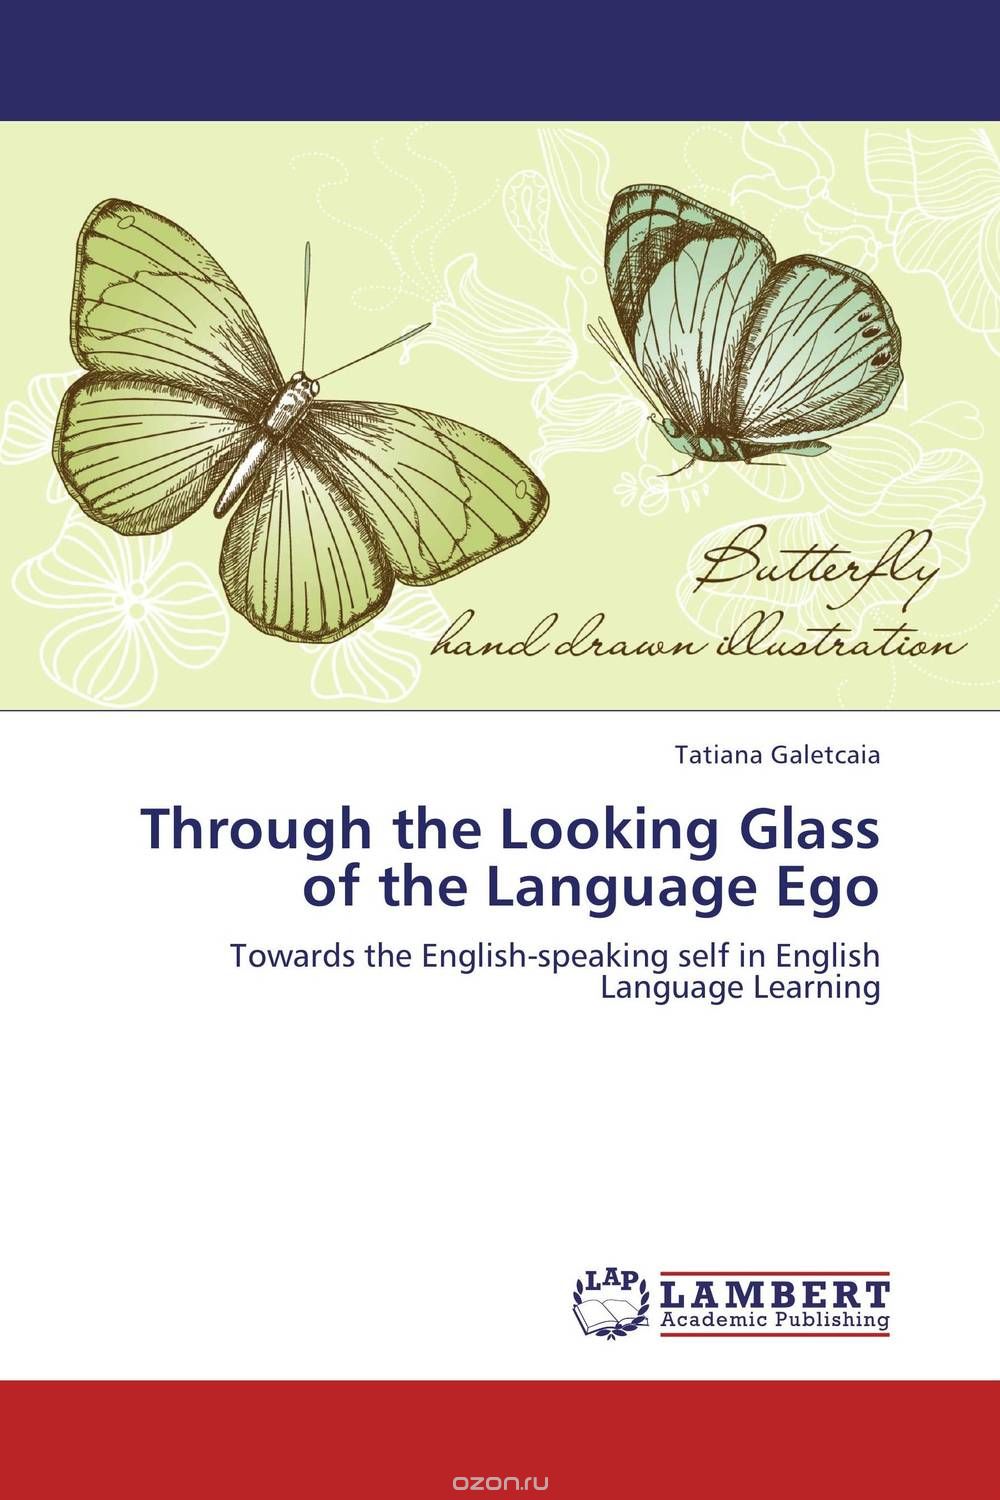 Скачать книгу "Through the Looking Glass of the Language Ego"